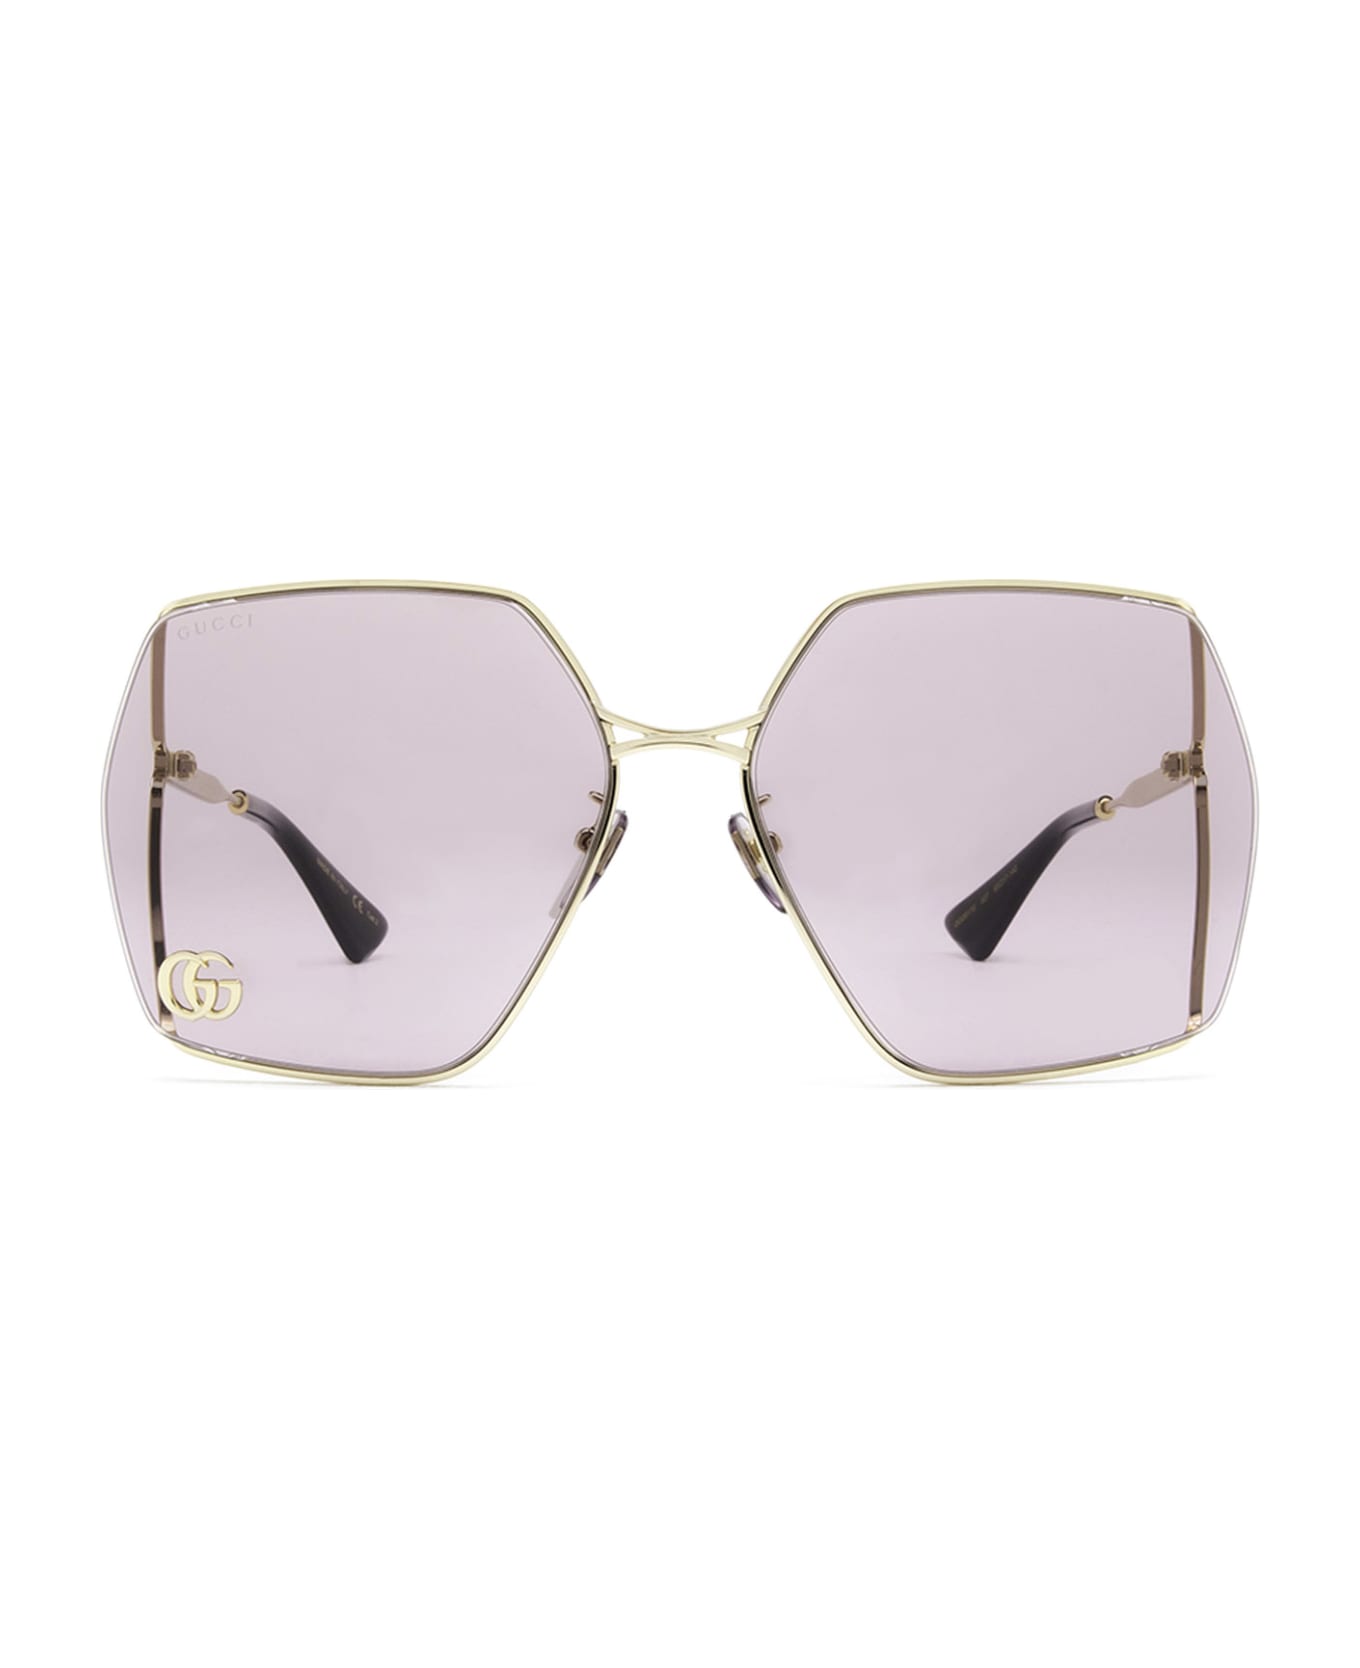 Gucci Eyewear Gg0817s Gold Sunglasses - Gold